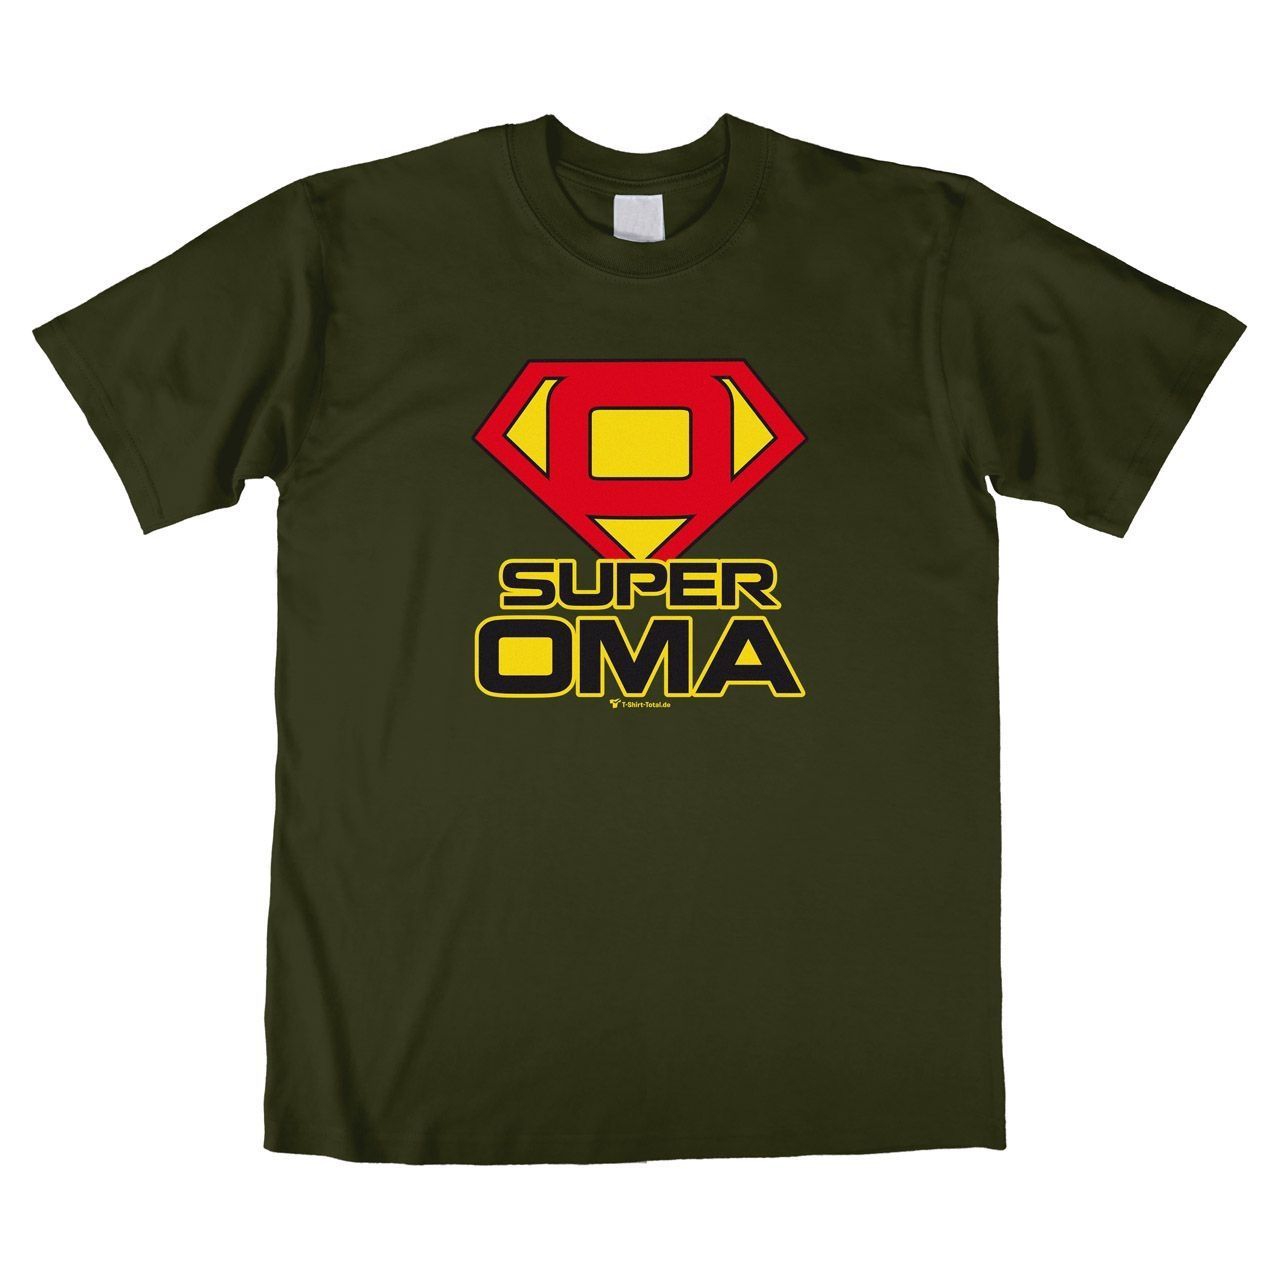 Super Oma Unisex T-Shirt khaki Medium